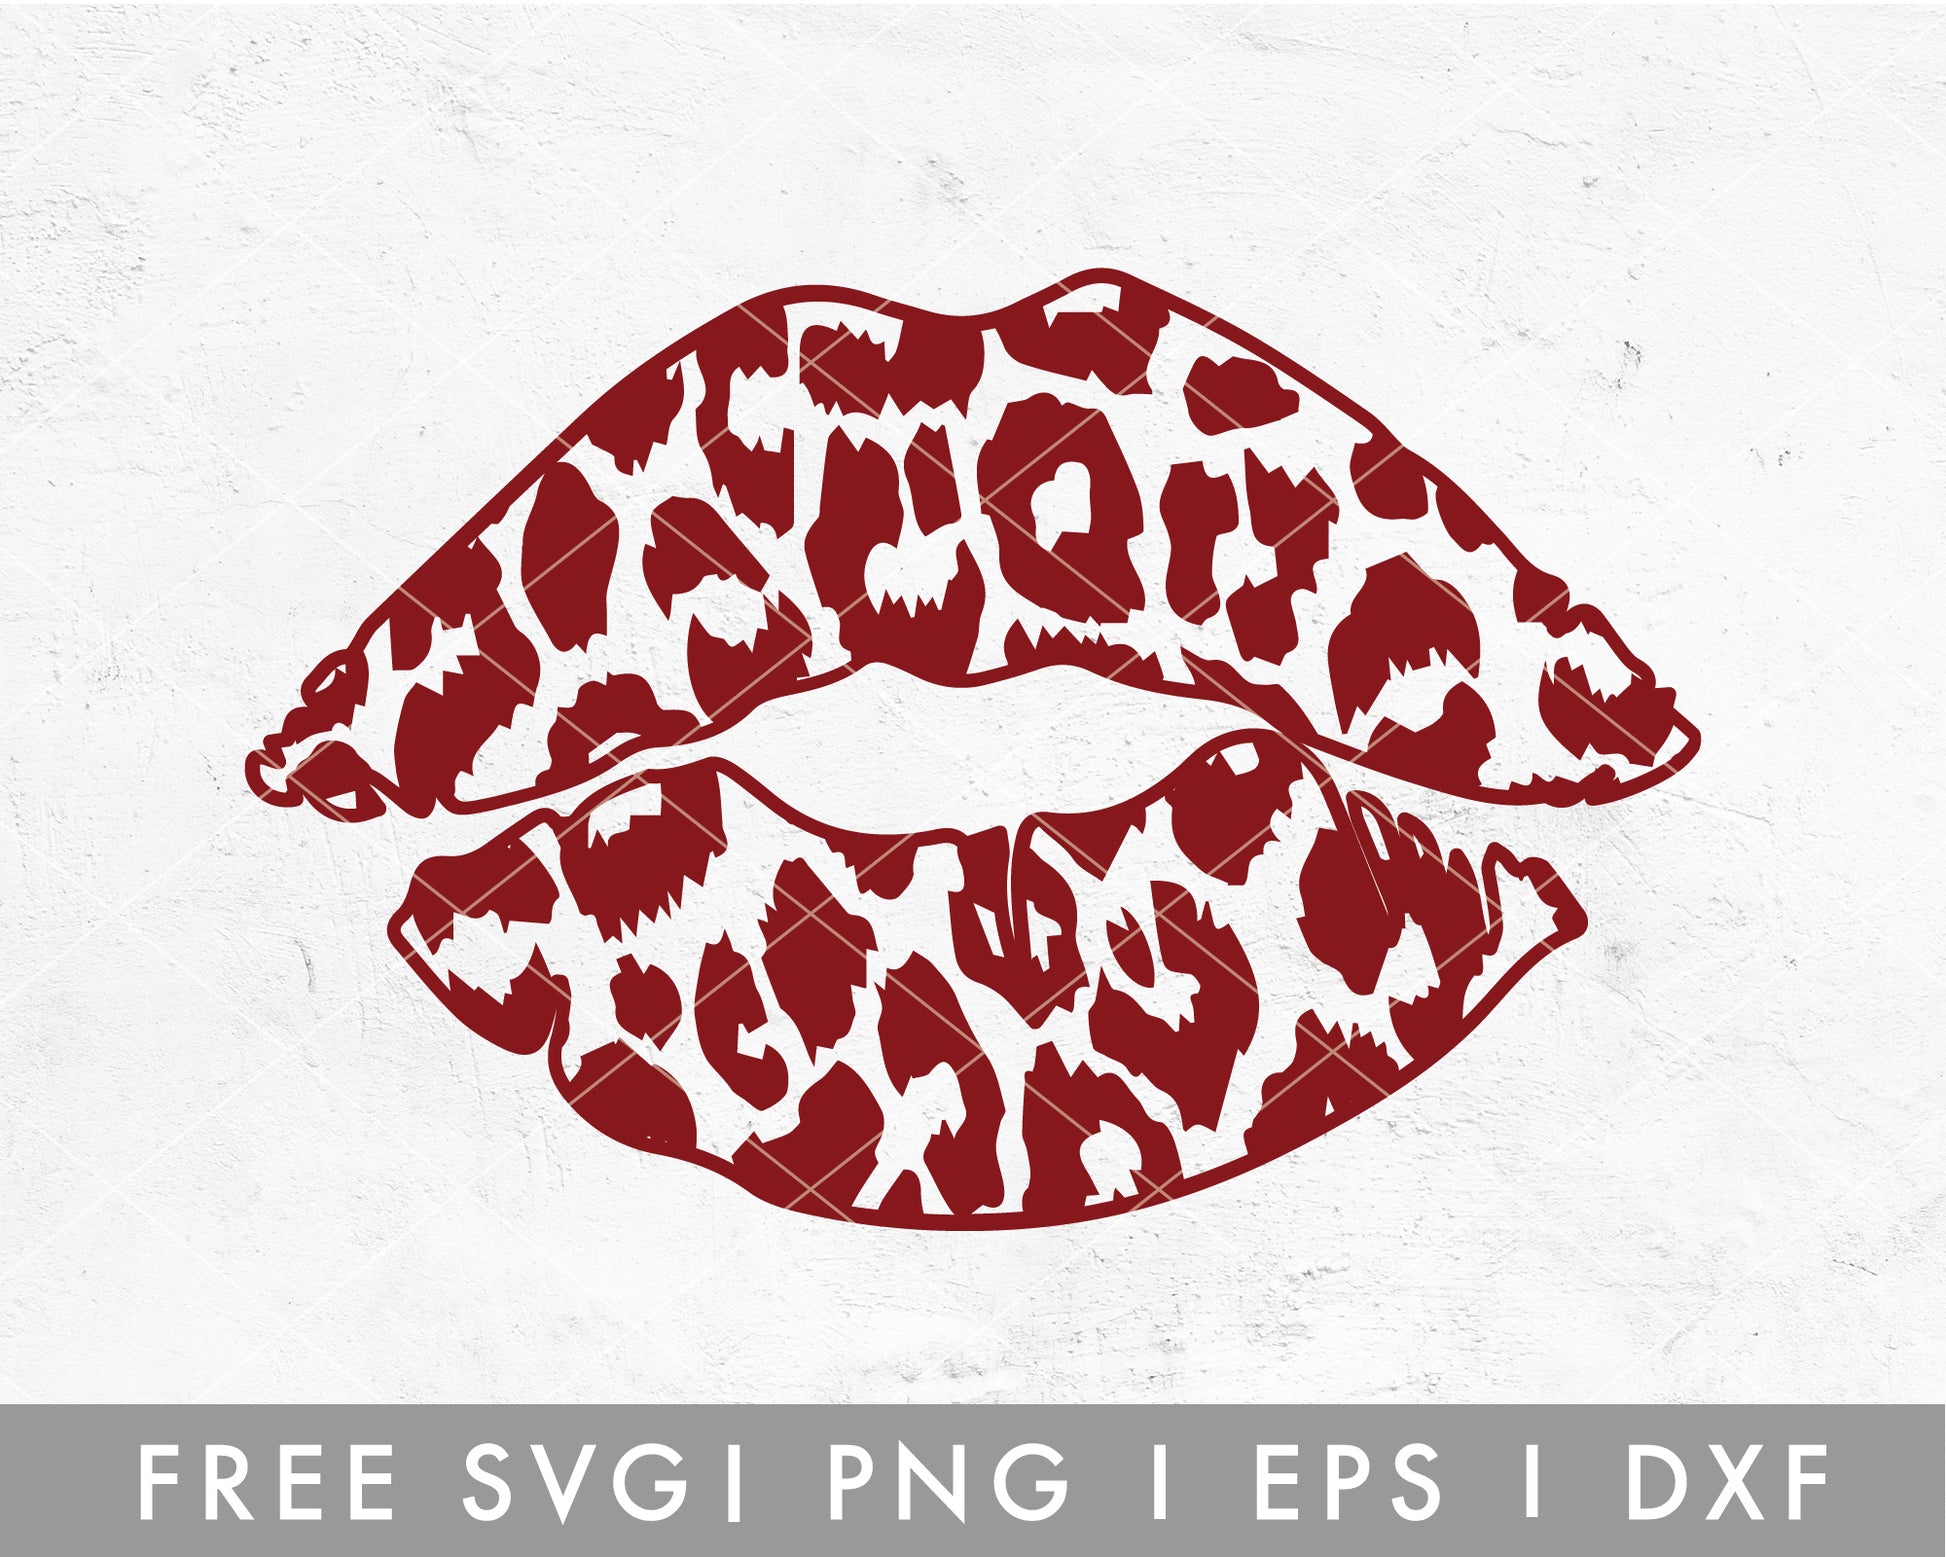 Leopard Lip SVG Cut File for Cricut, Cameo Silhouette – Caluya Design